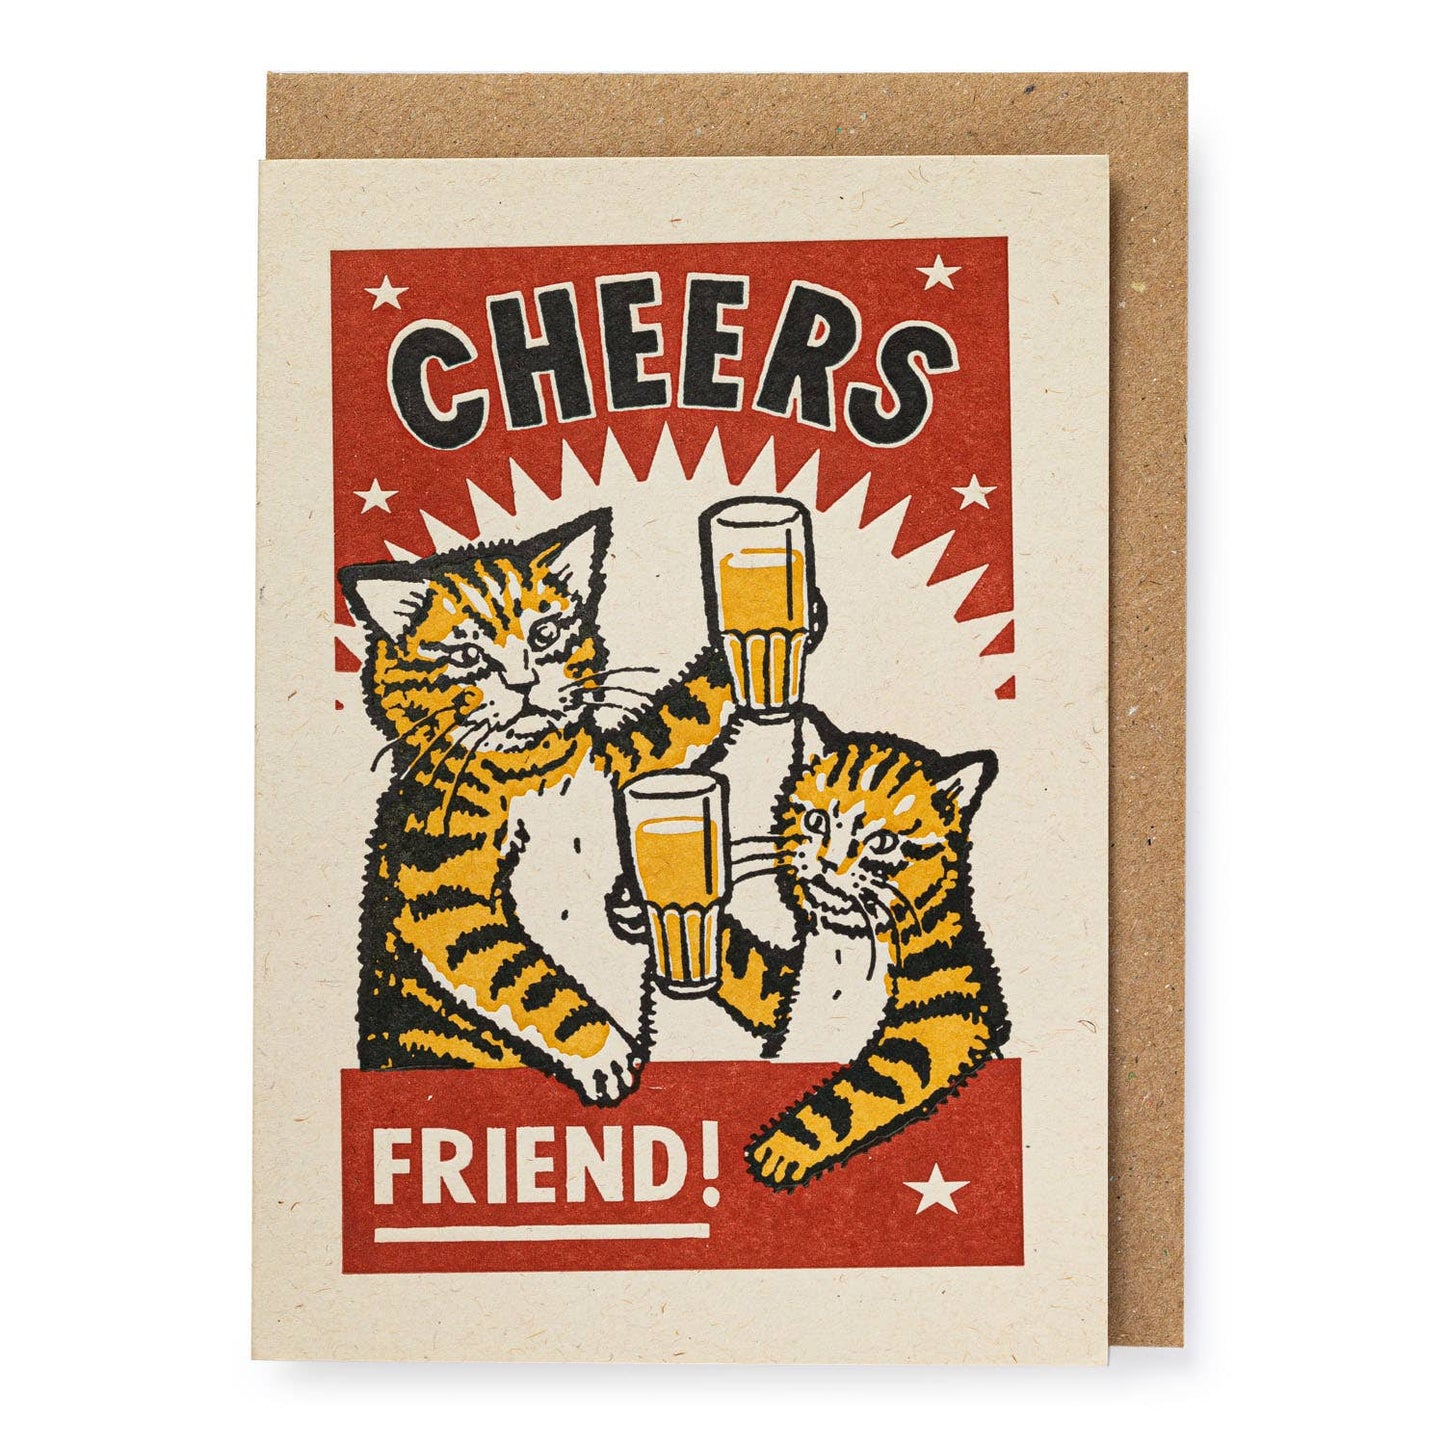 Cheers Friend! Greeting Card